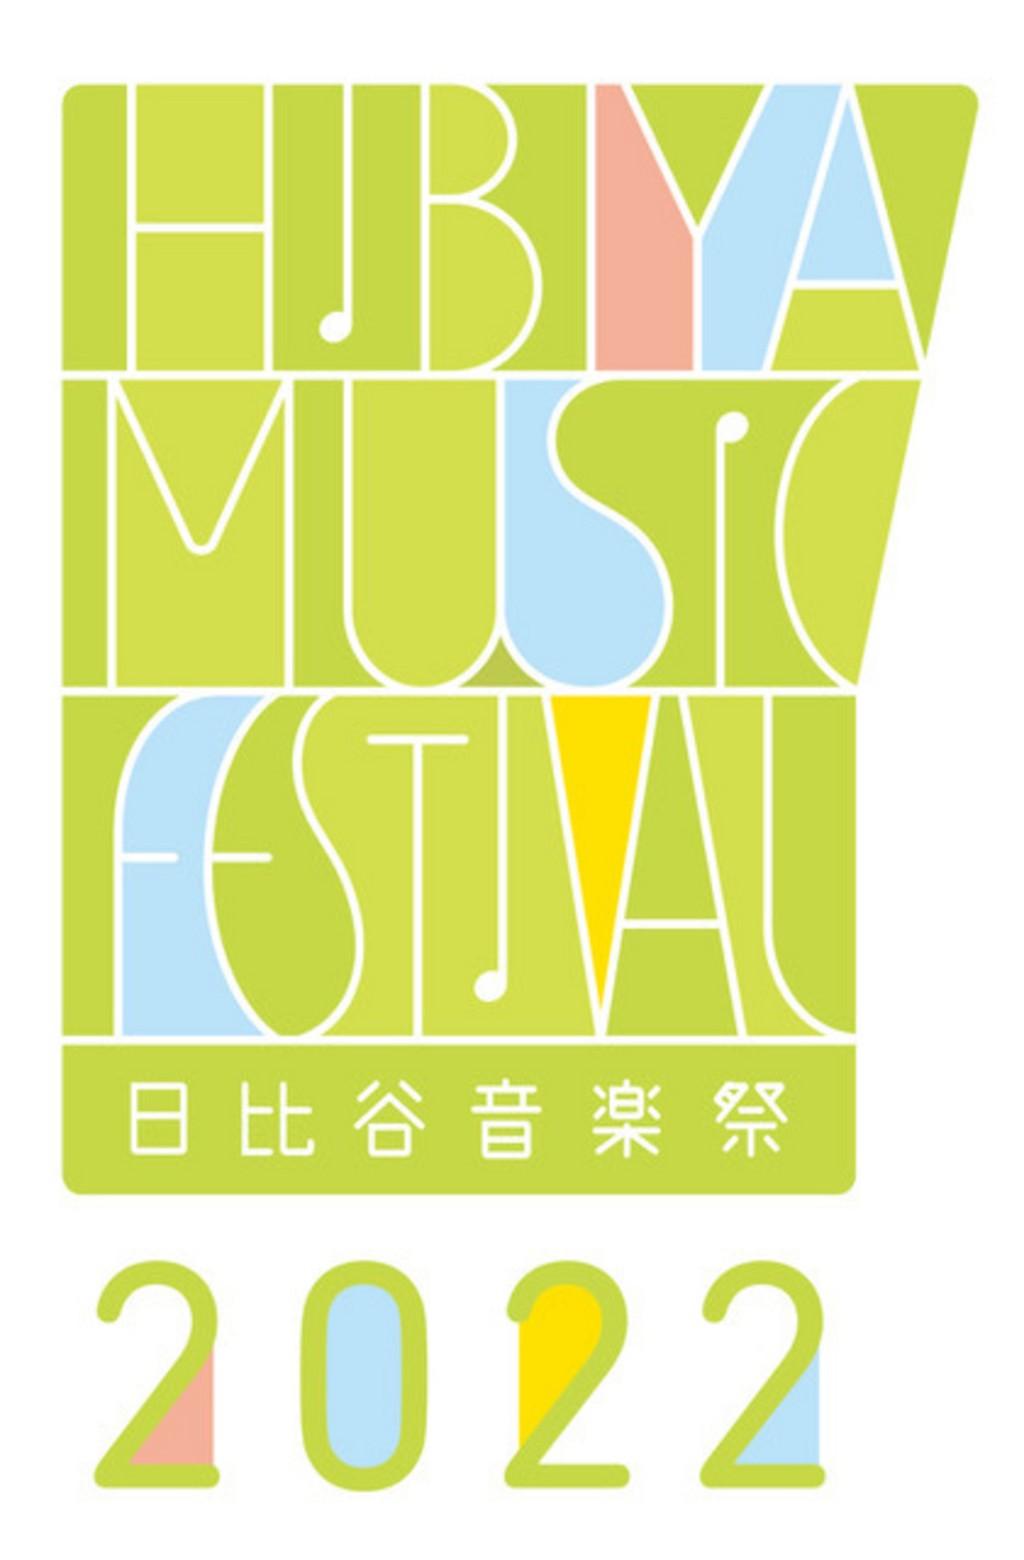 Lineup Poster Hibiya Music Festival 2022